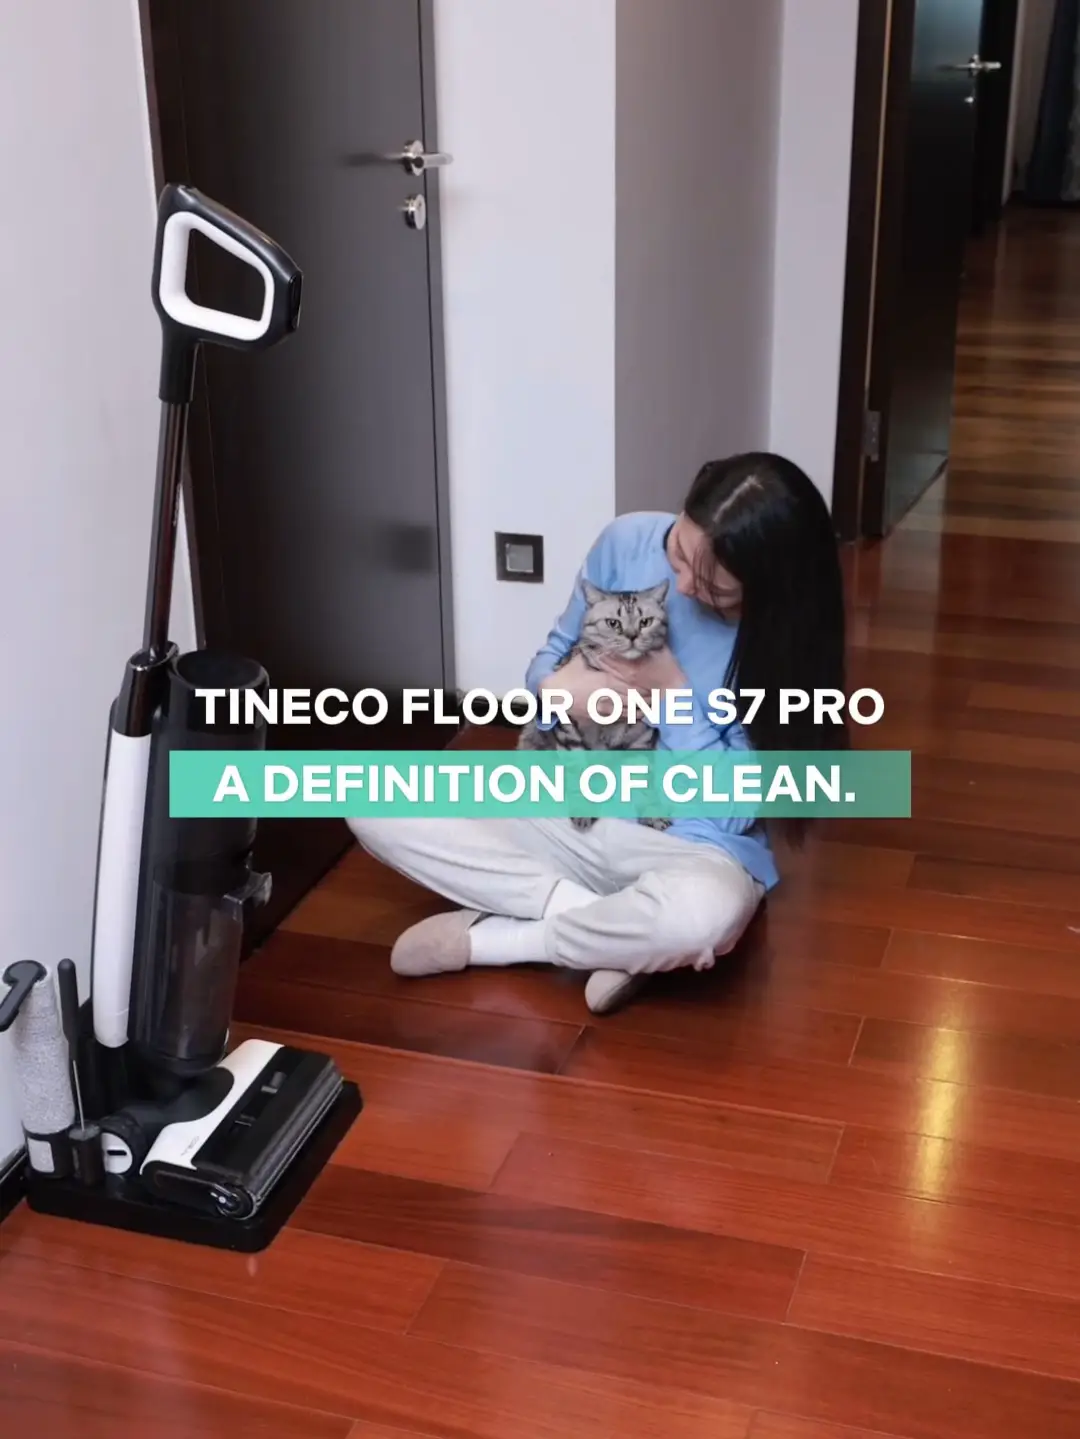 Tineco Indonesia (@tineco.indonesia) • Instagram photos and videos